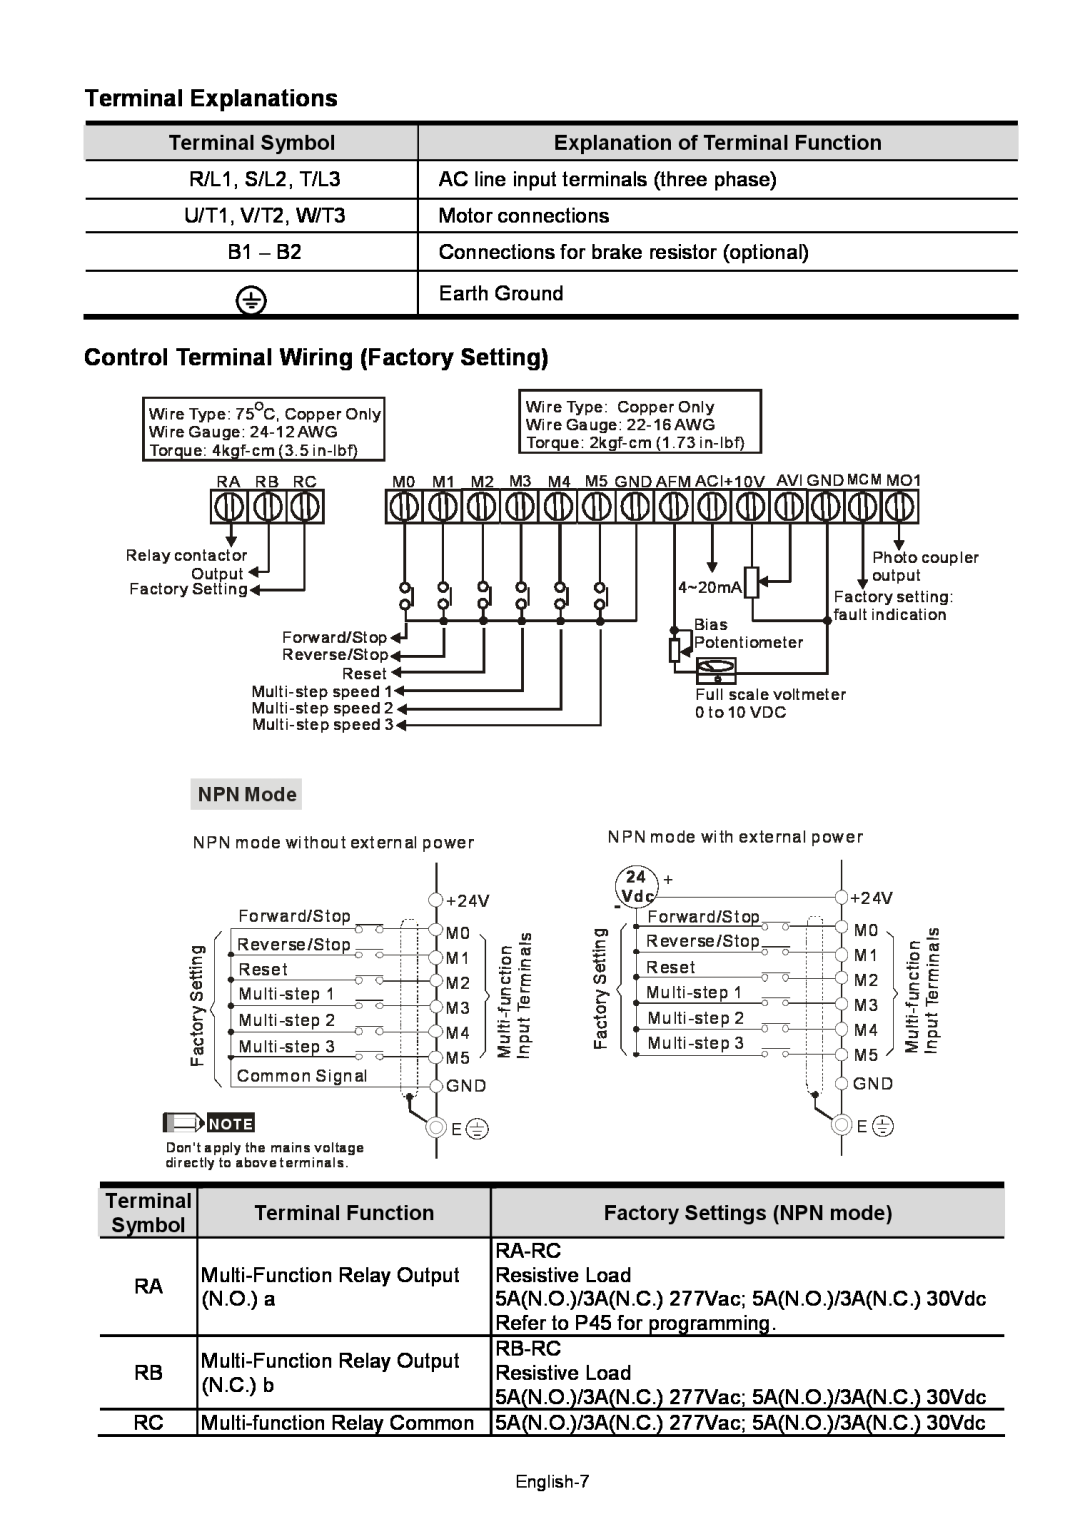 Delta Electronics VFD-XXXM Terminal Explanations, Control Terminal Wiring Factory Setting, Terminal Symbol, NPN Mode, 24 + 